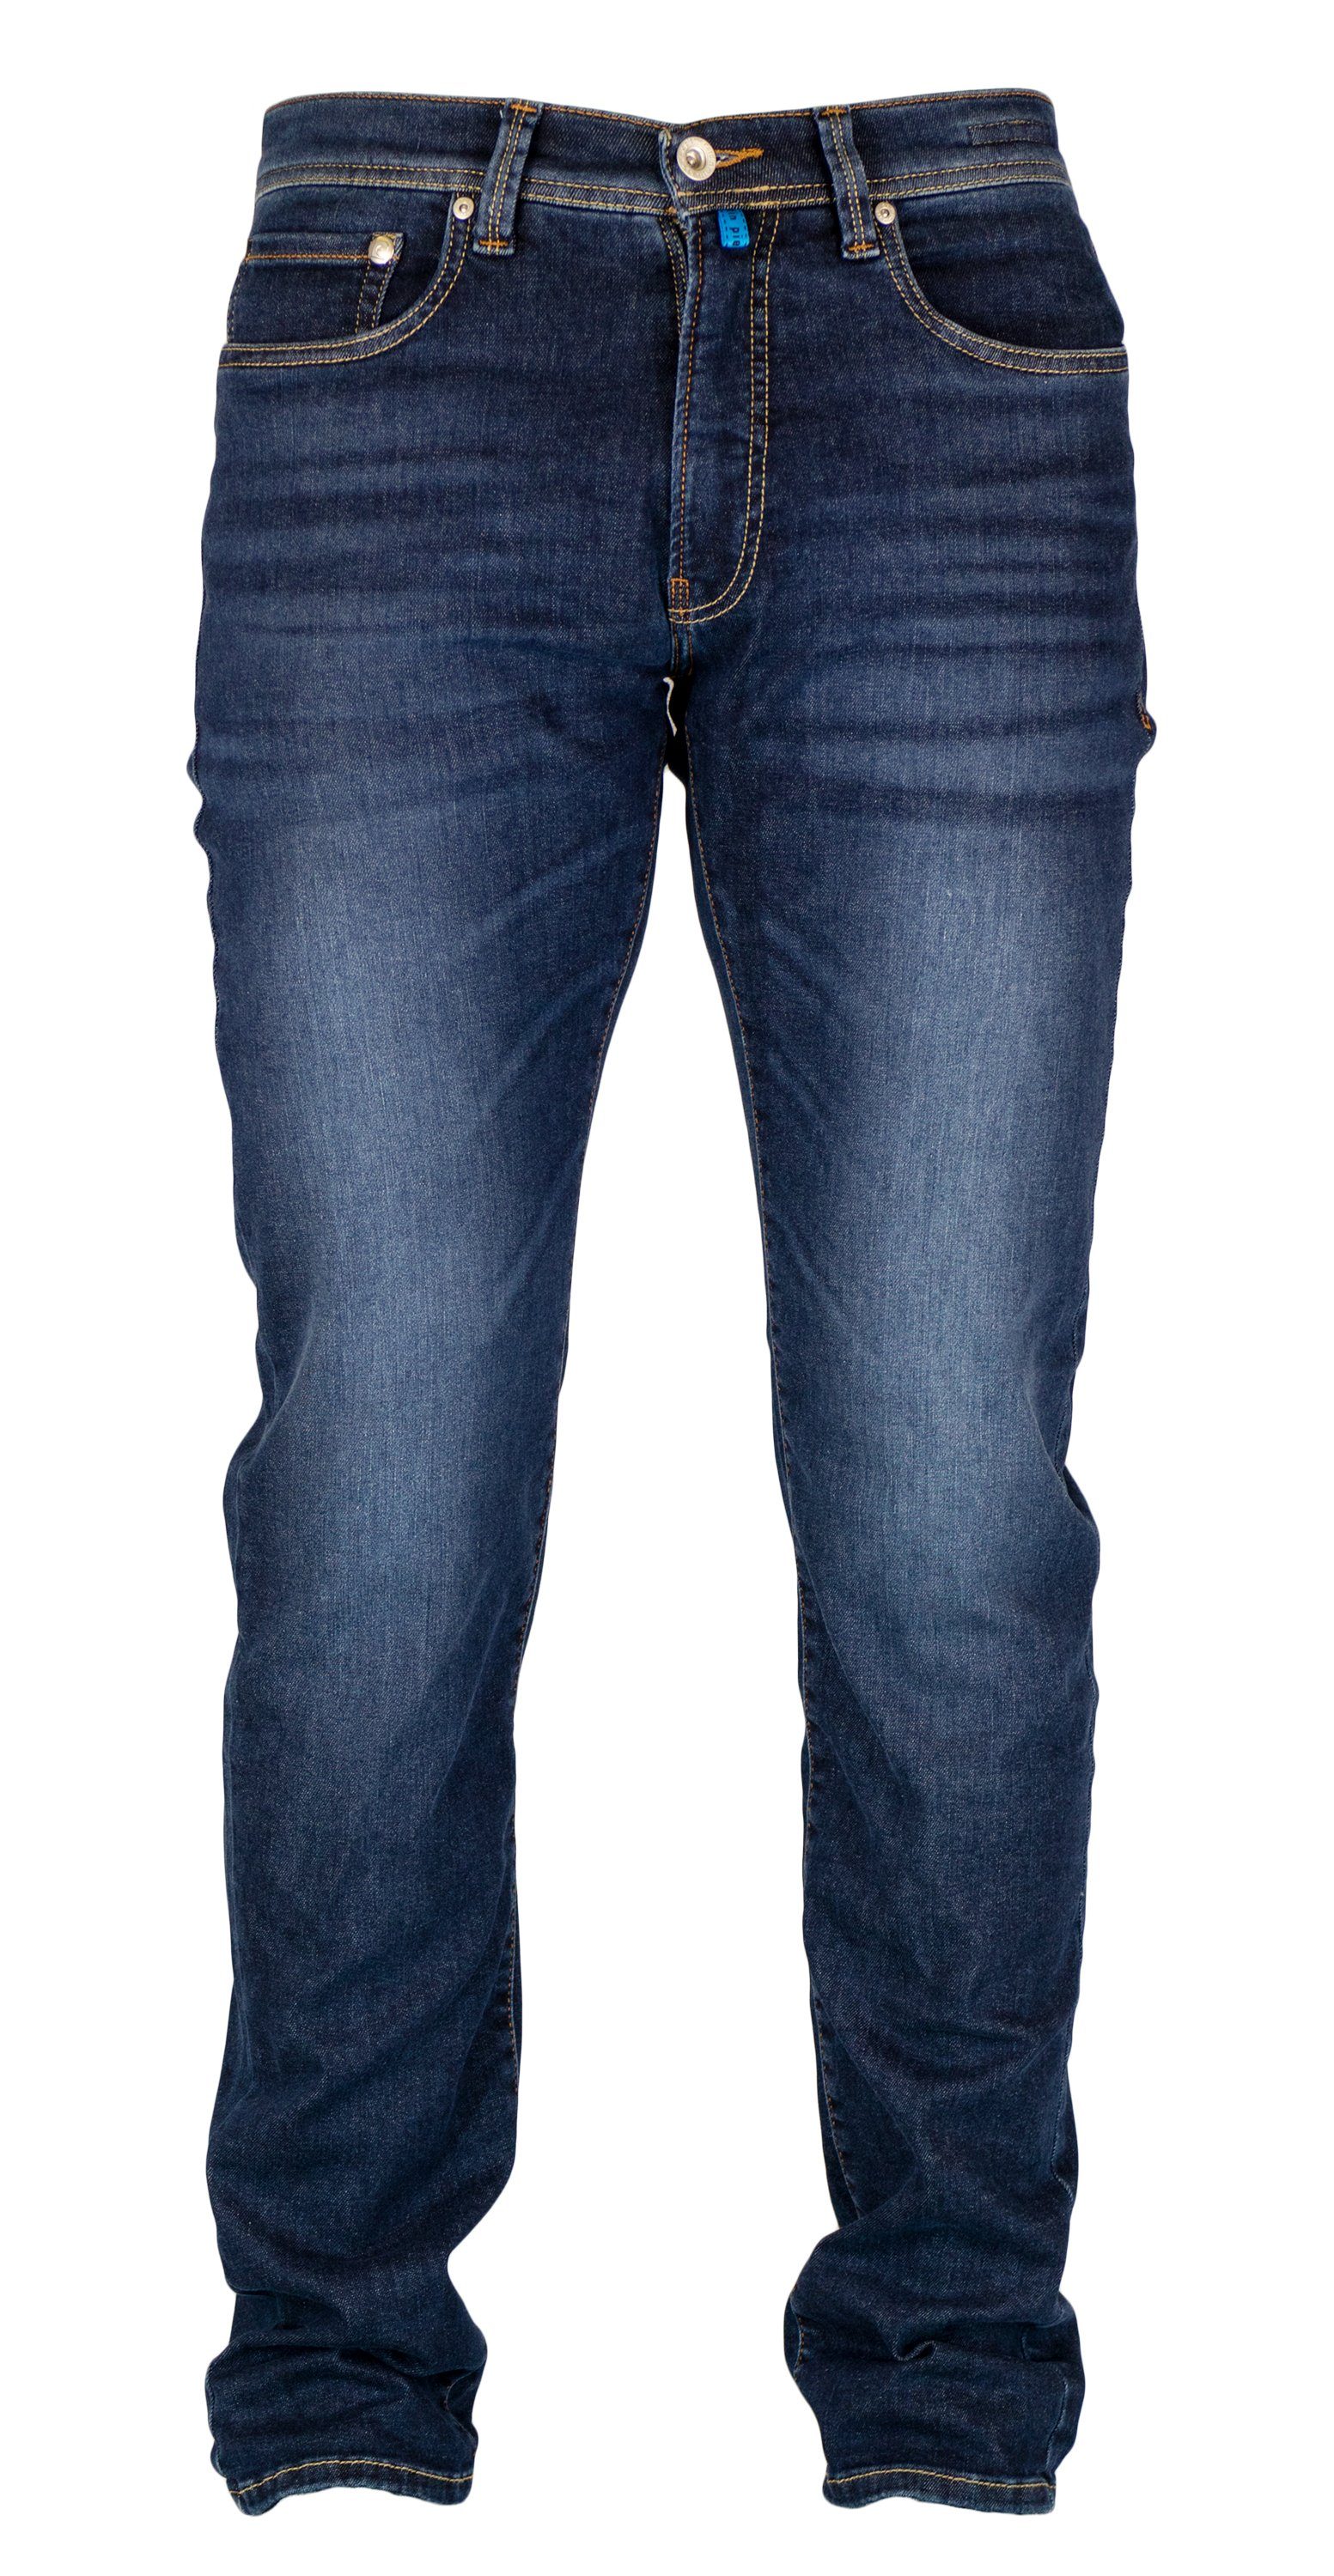 Pierre Cardin 5-Pocket-Jeans PIERRE FUTUREFLEX indigo 8880.63 dark CARDIN 3451 used LYON